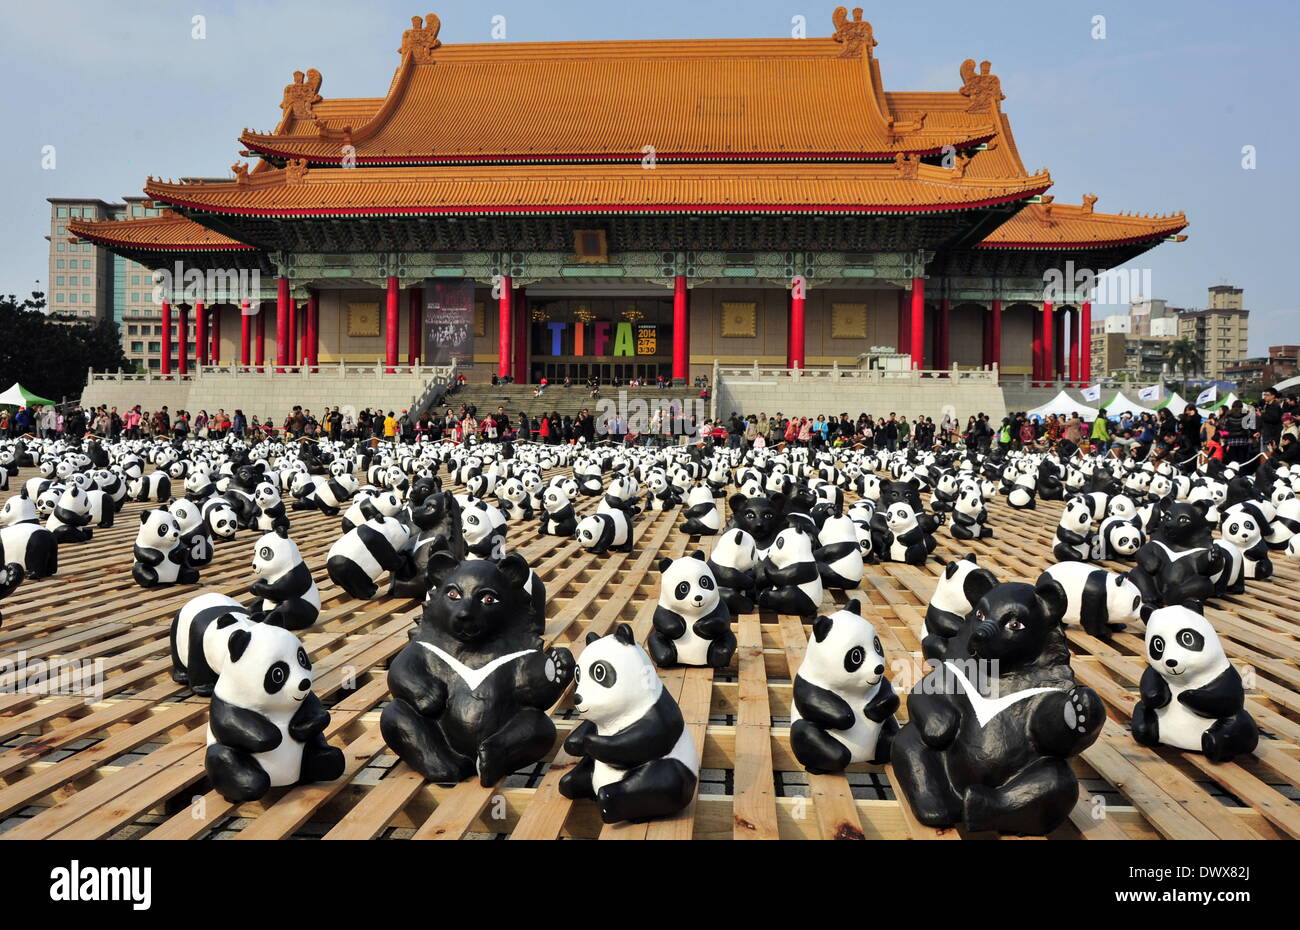 Родина панд. Заповедник панд в Чэнду. Панда в Китае. Площадь панд в Китае. Город панд в Китае.